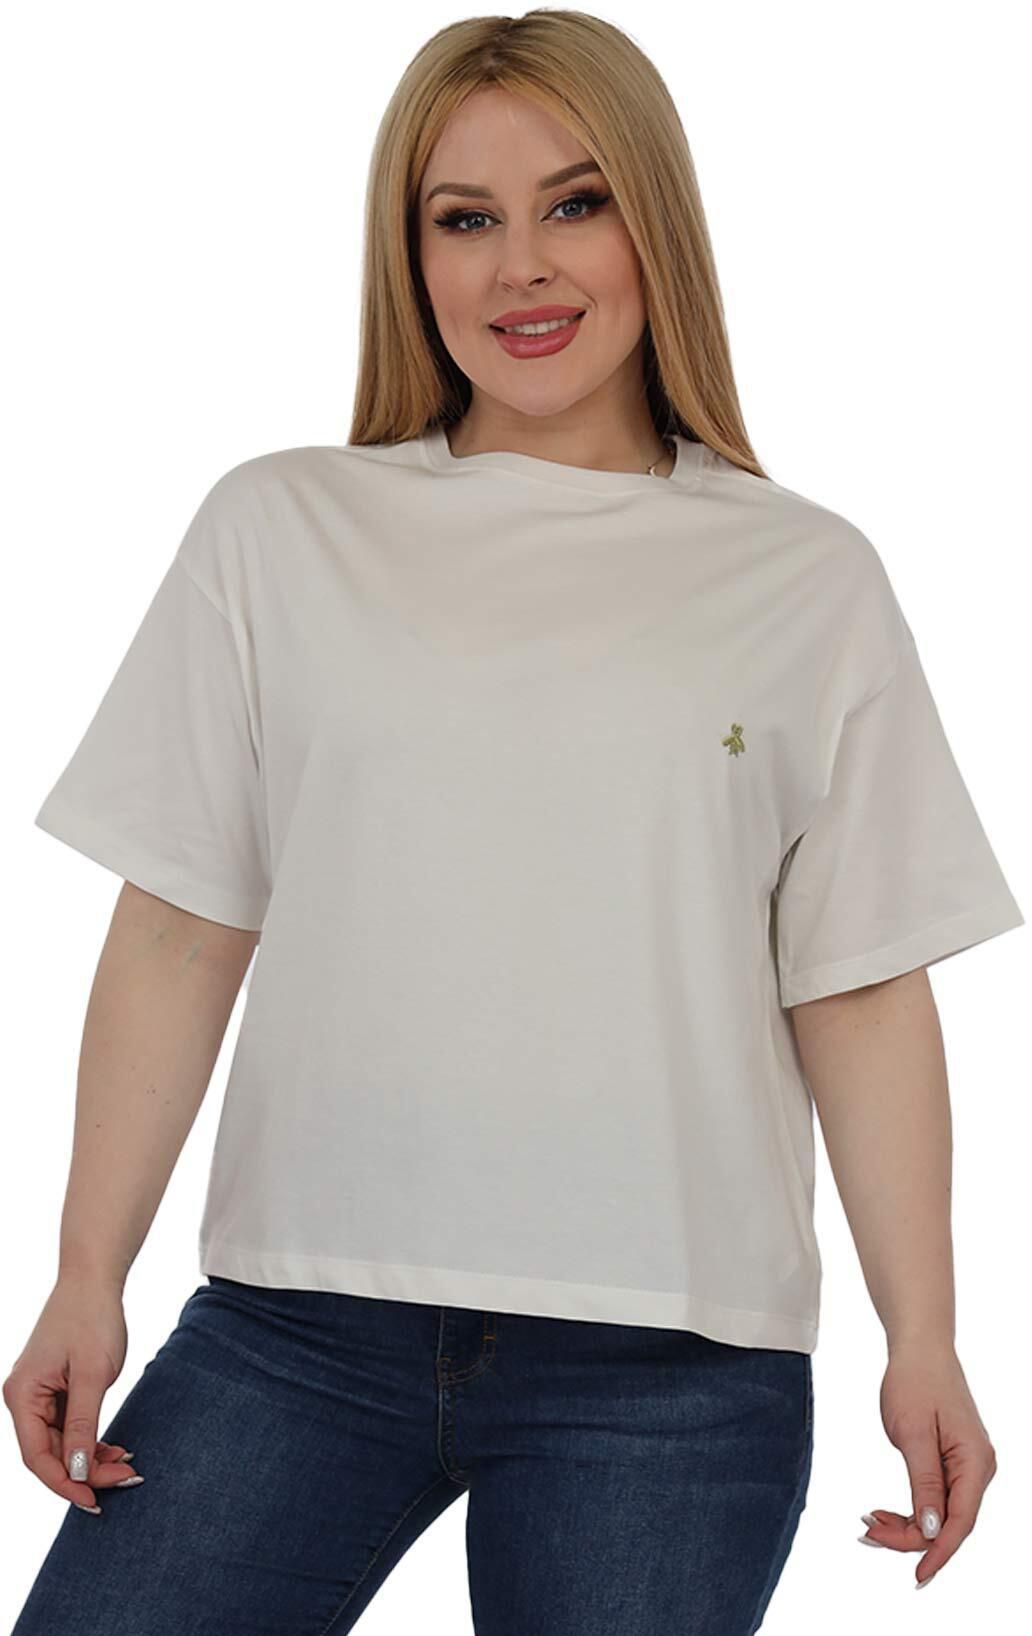 La Collection T-Shirt for Women - Medium - White